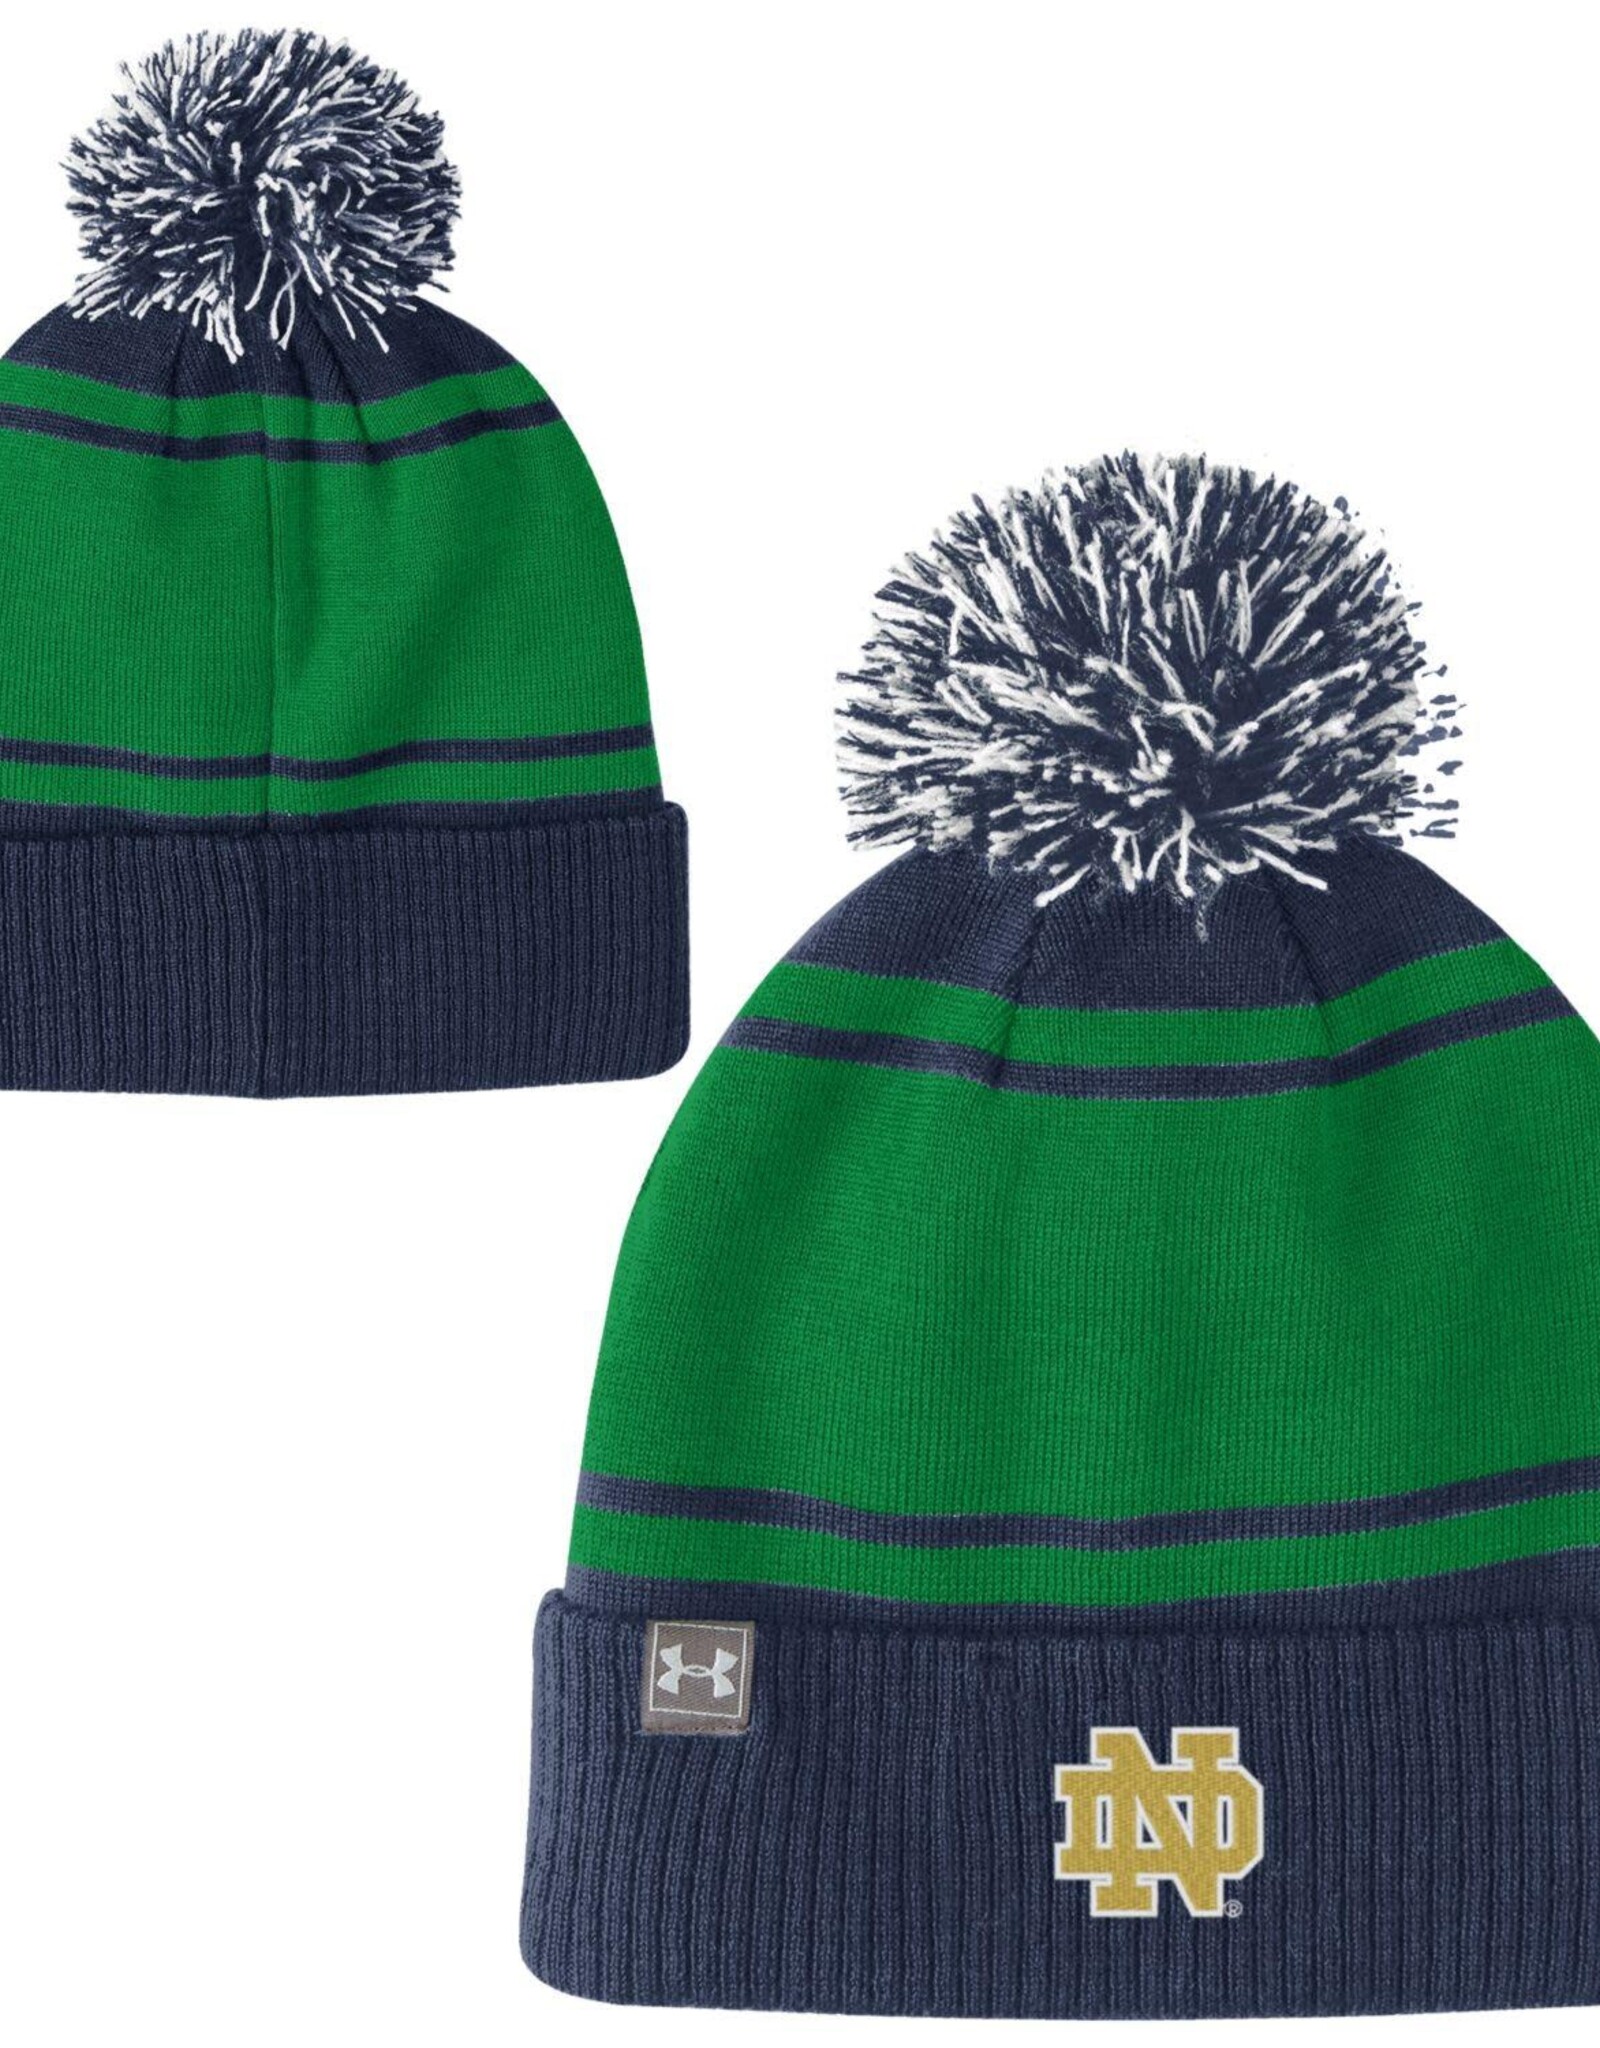 Under Armour Notre Dame Fighting Irish Cuffed Knit Pom Beanie Hat